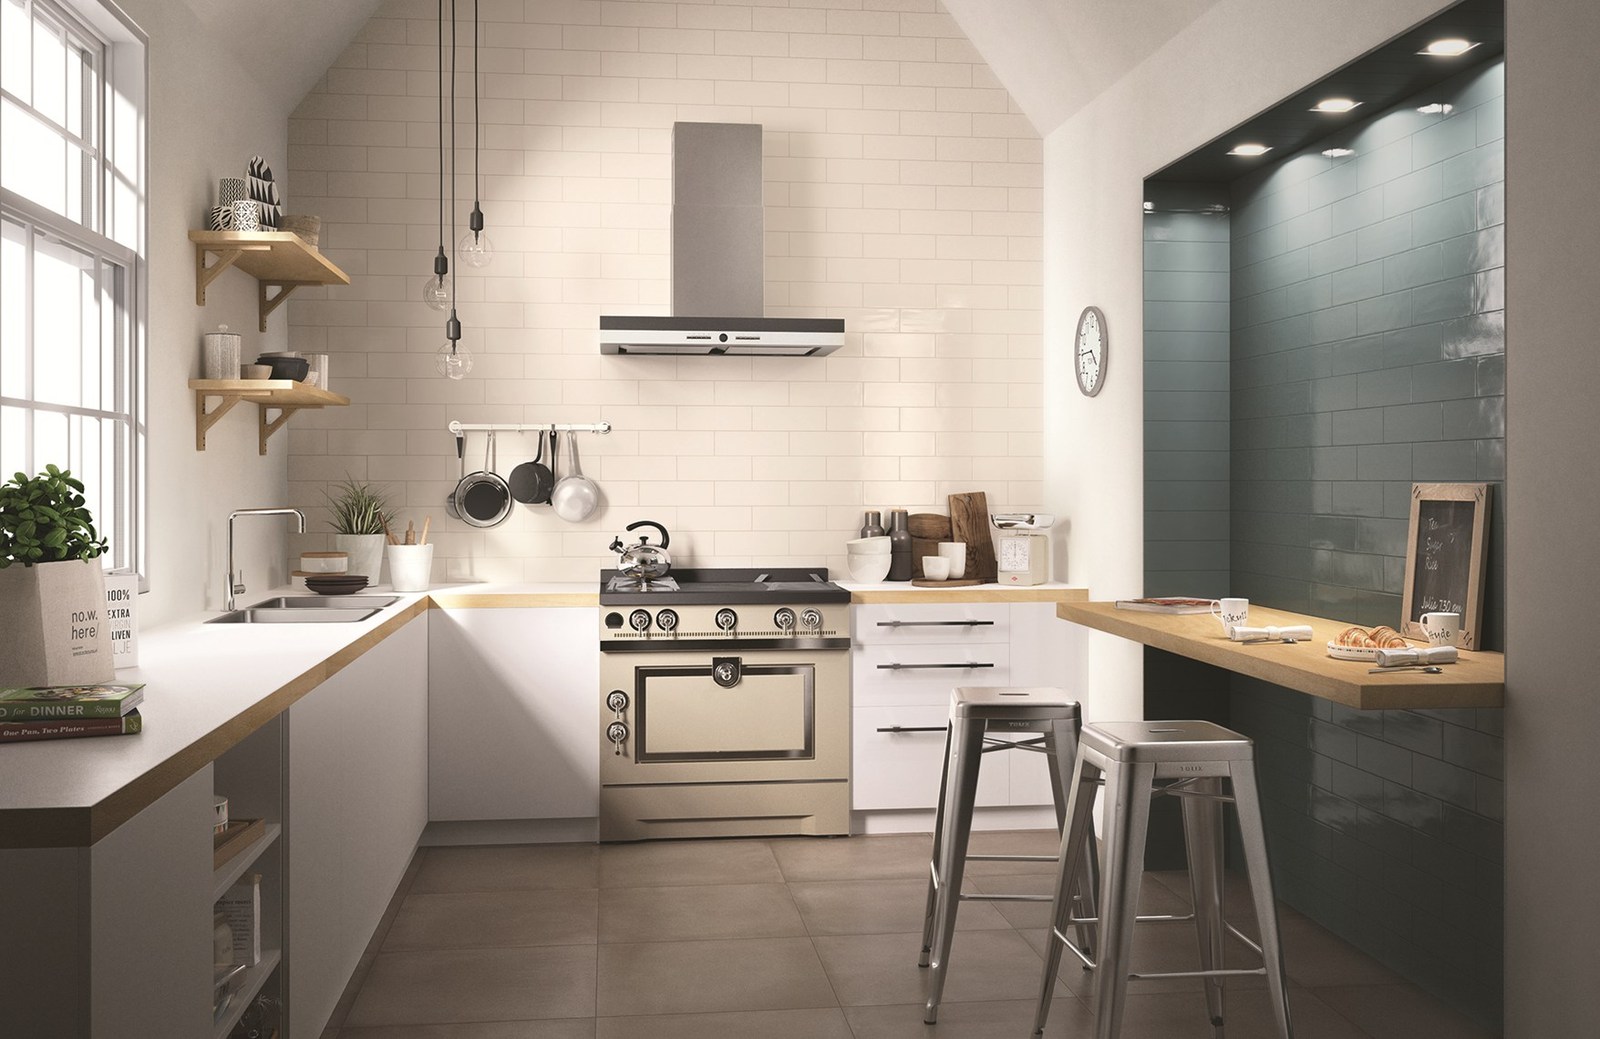 tiling-walls-in-brick-pattern-ragno-2-kitchen.jpg